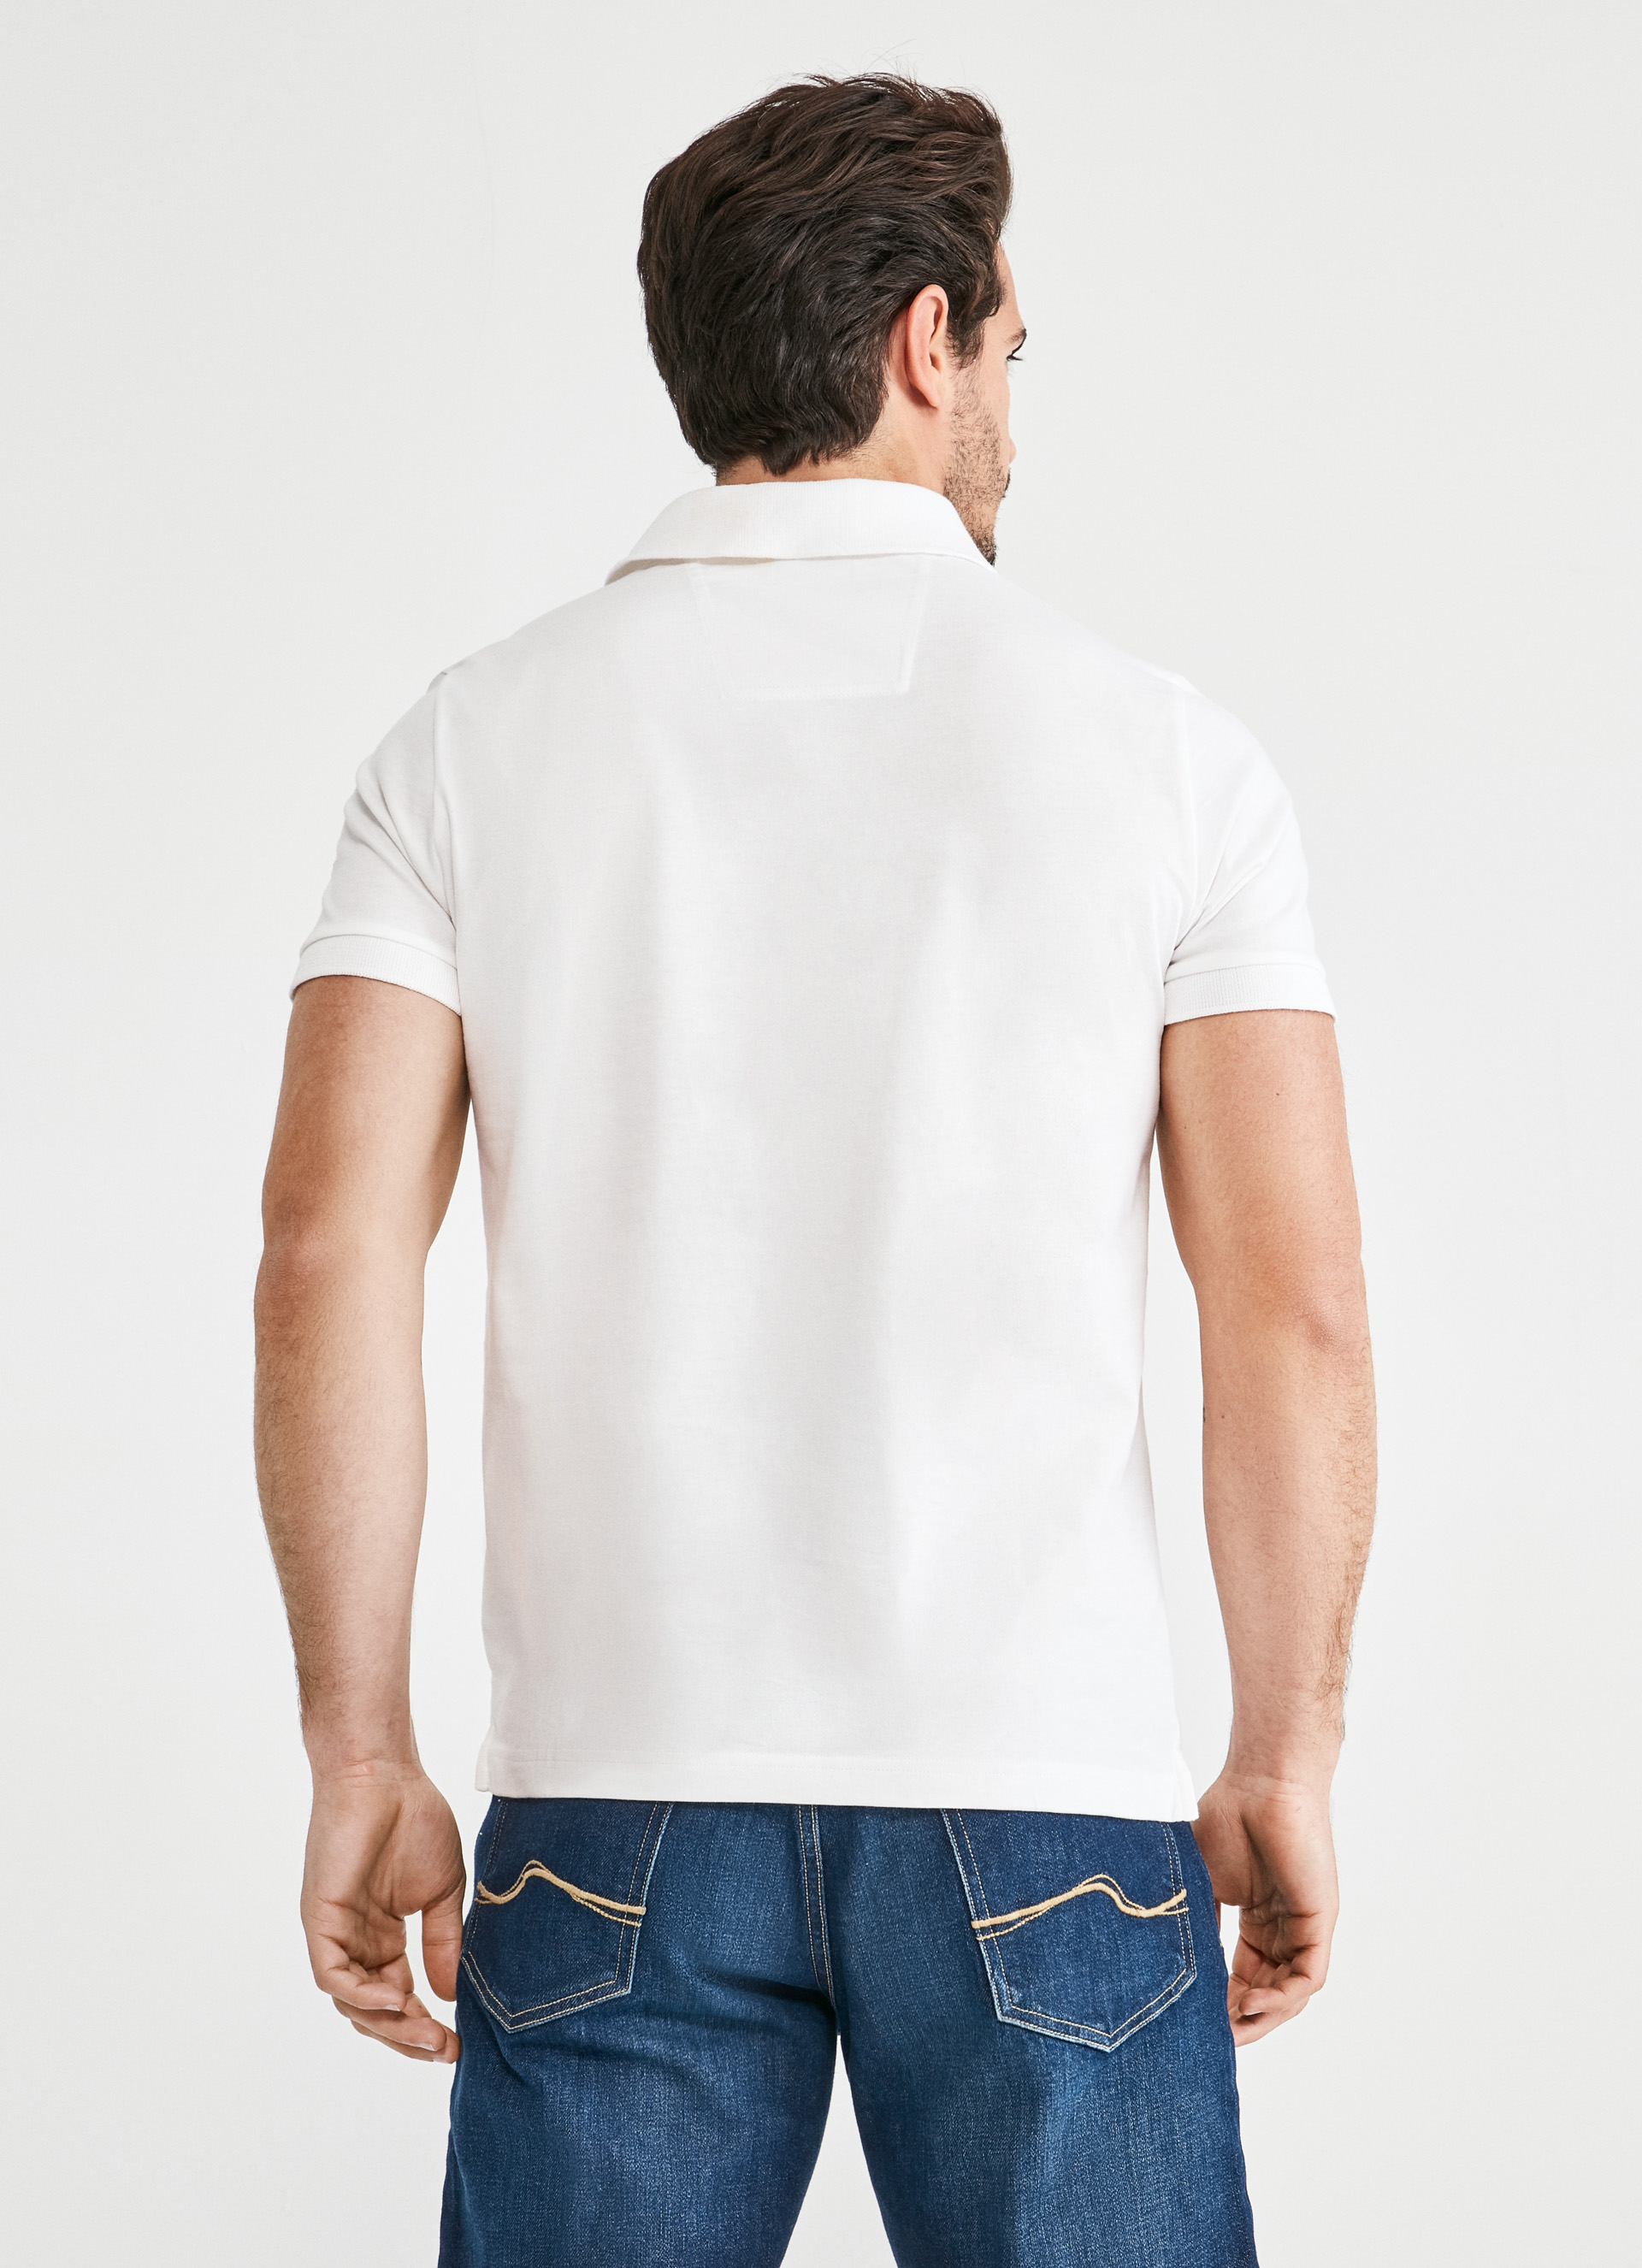 Explore the Men’s Polo Shirts Collection | Façonnable